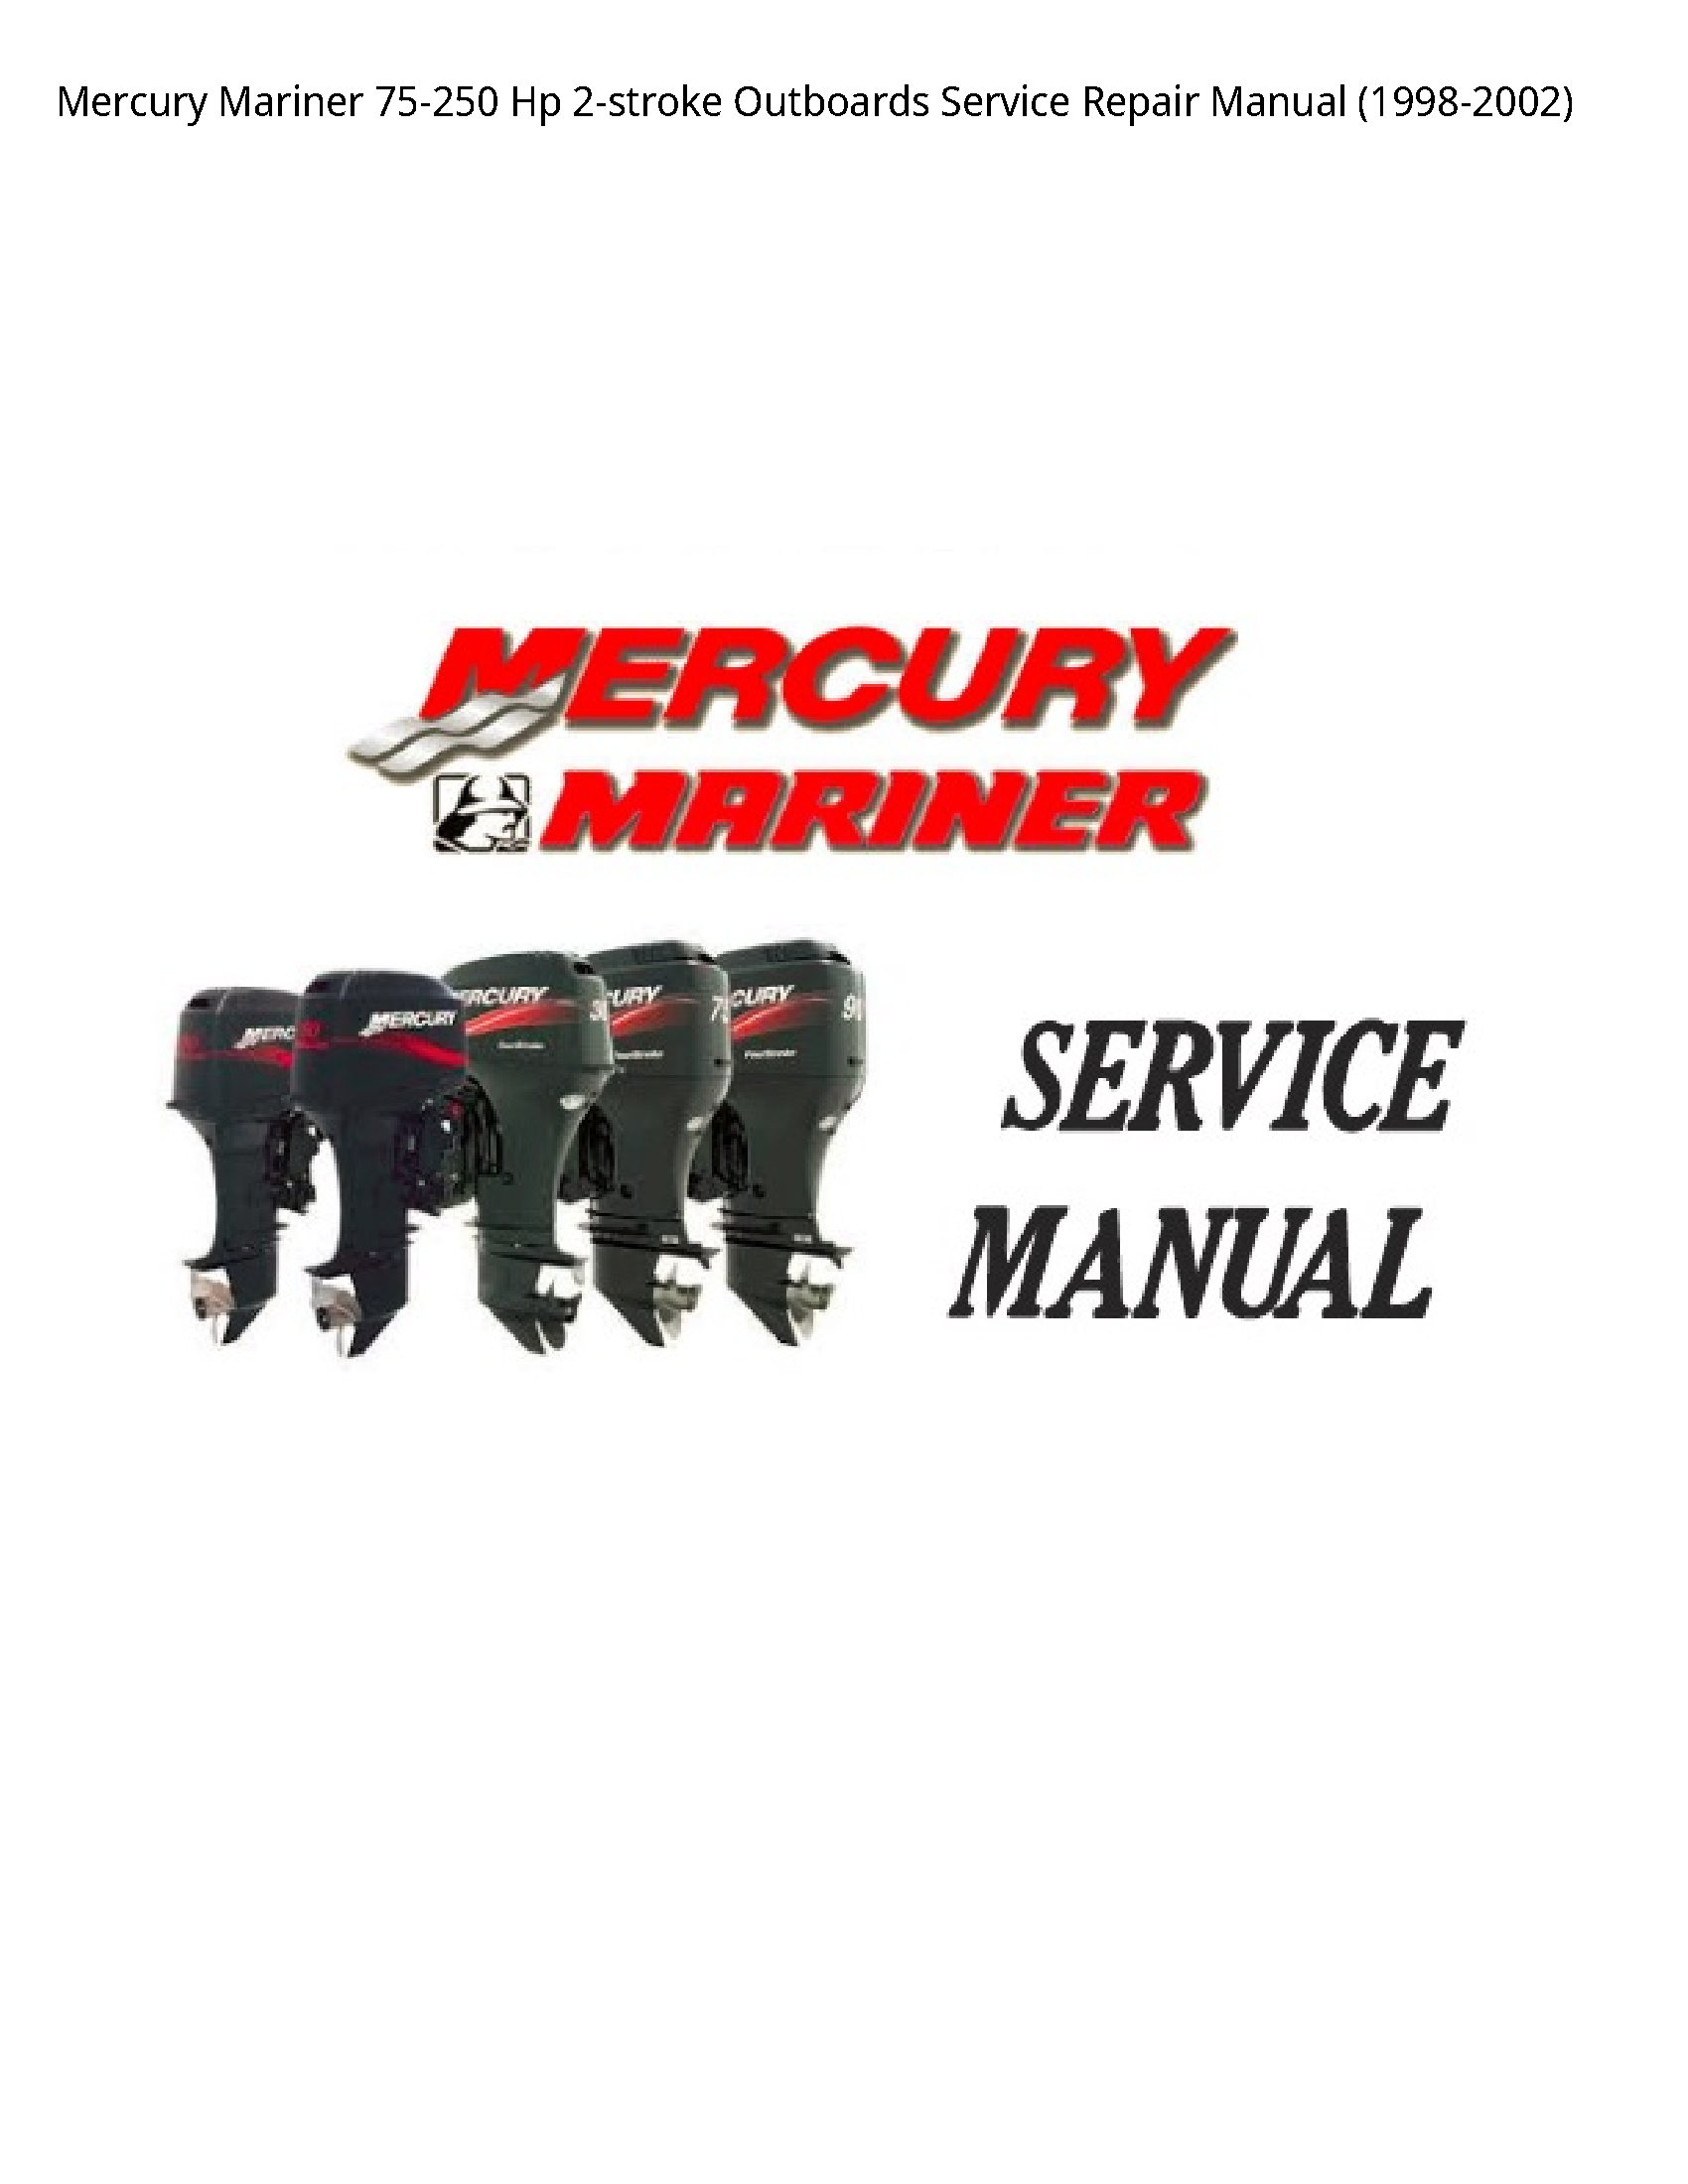 Mercury Mariner 75-250 Hp Outboards manual